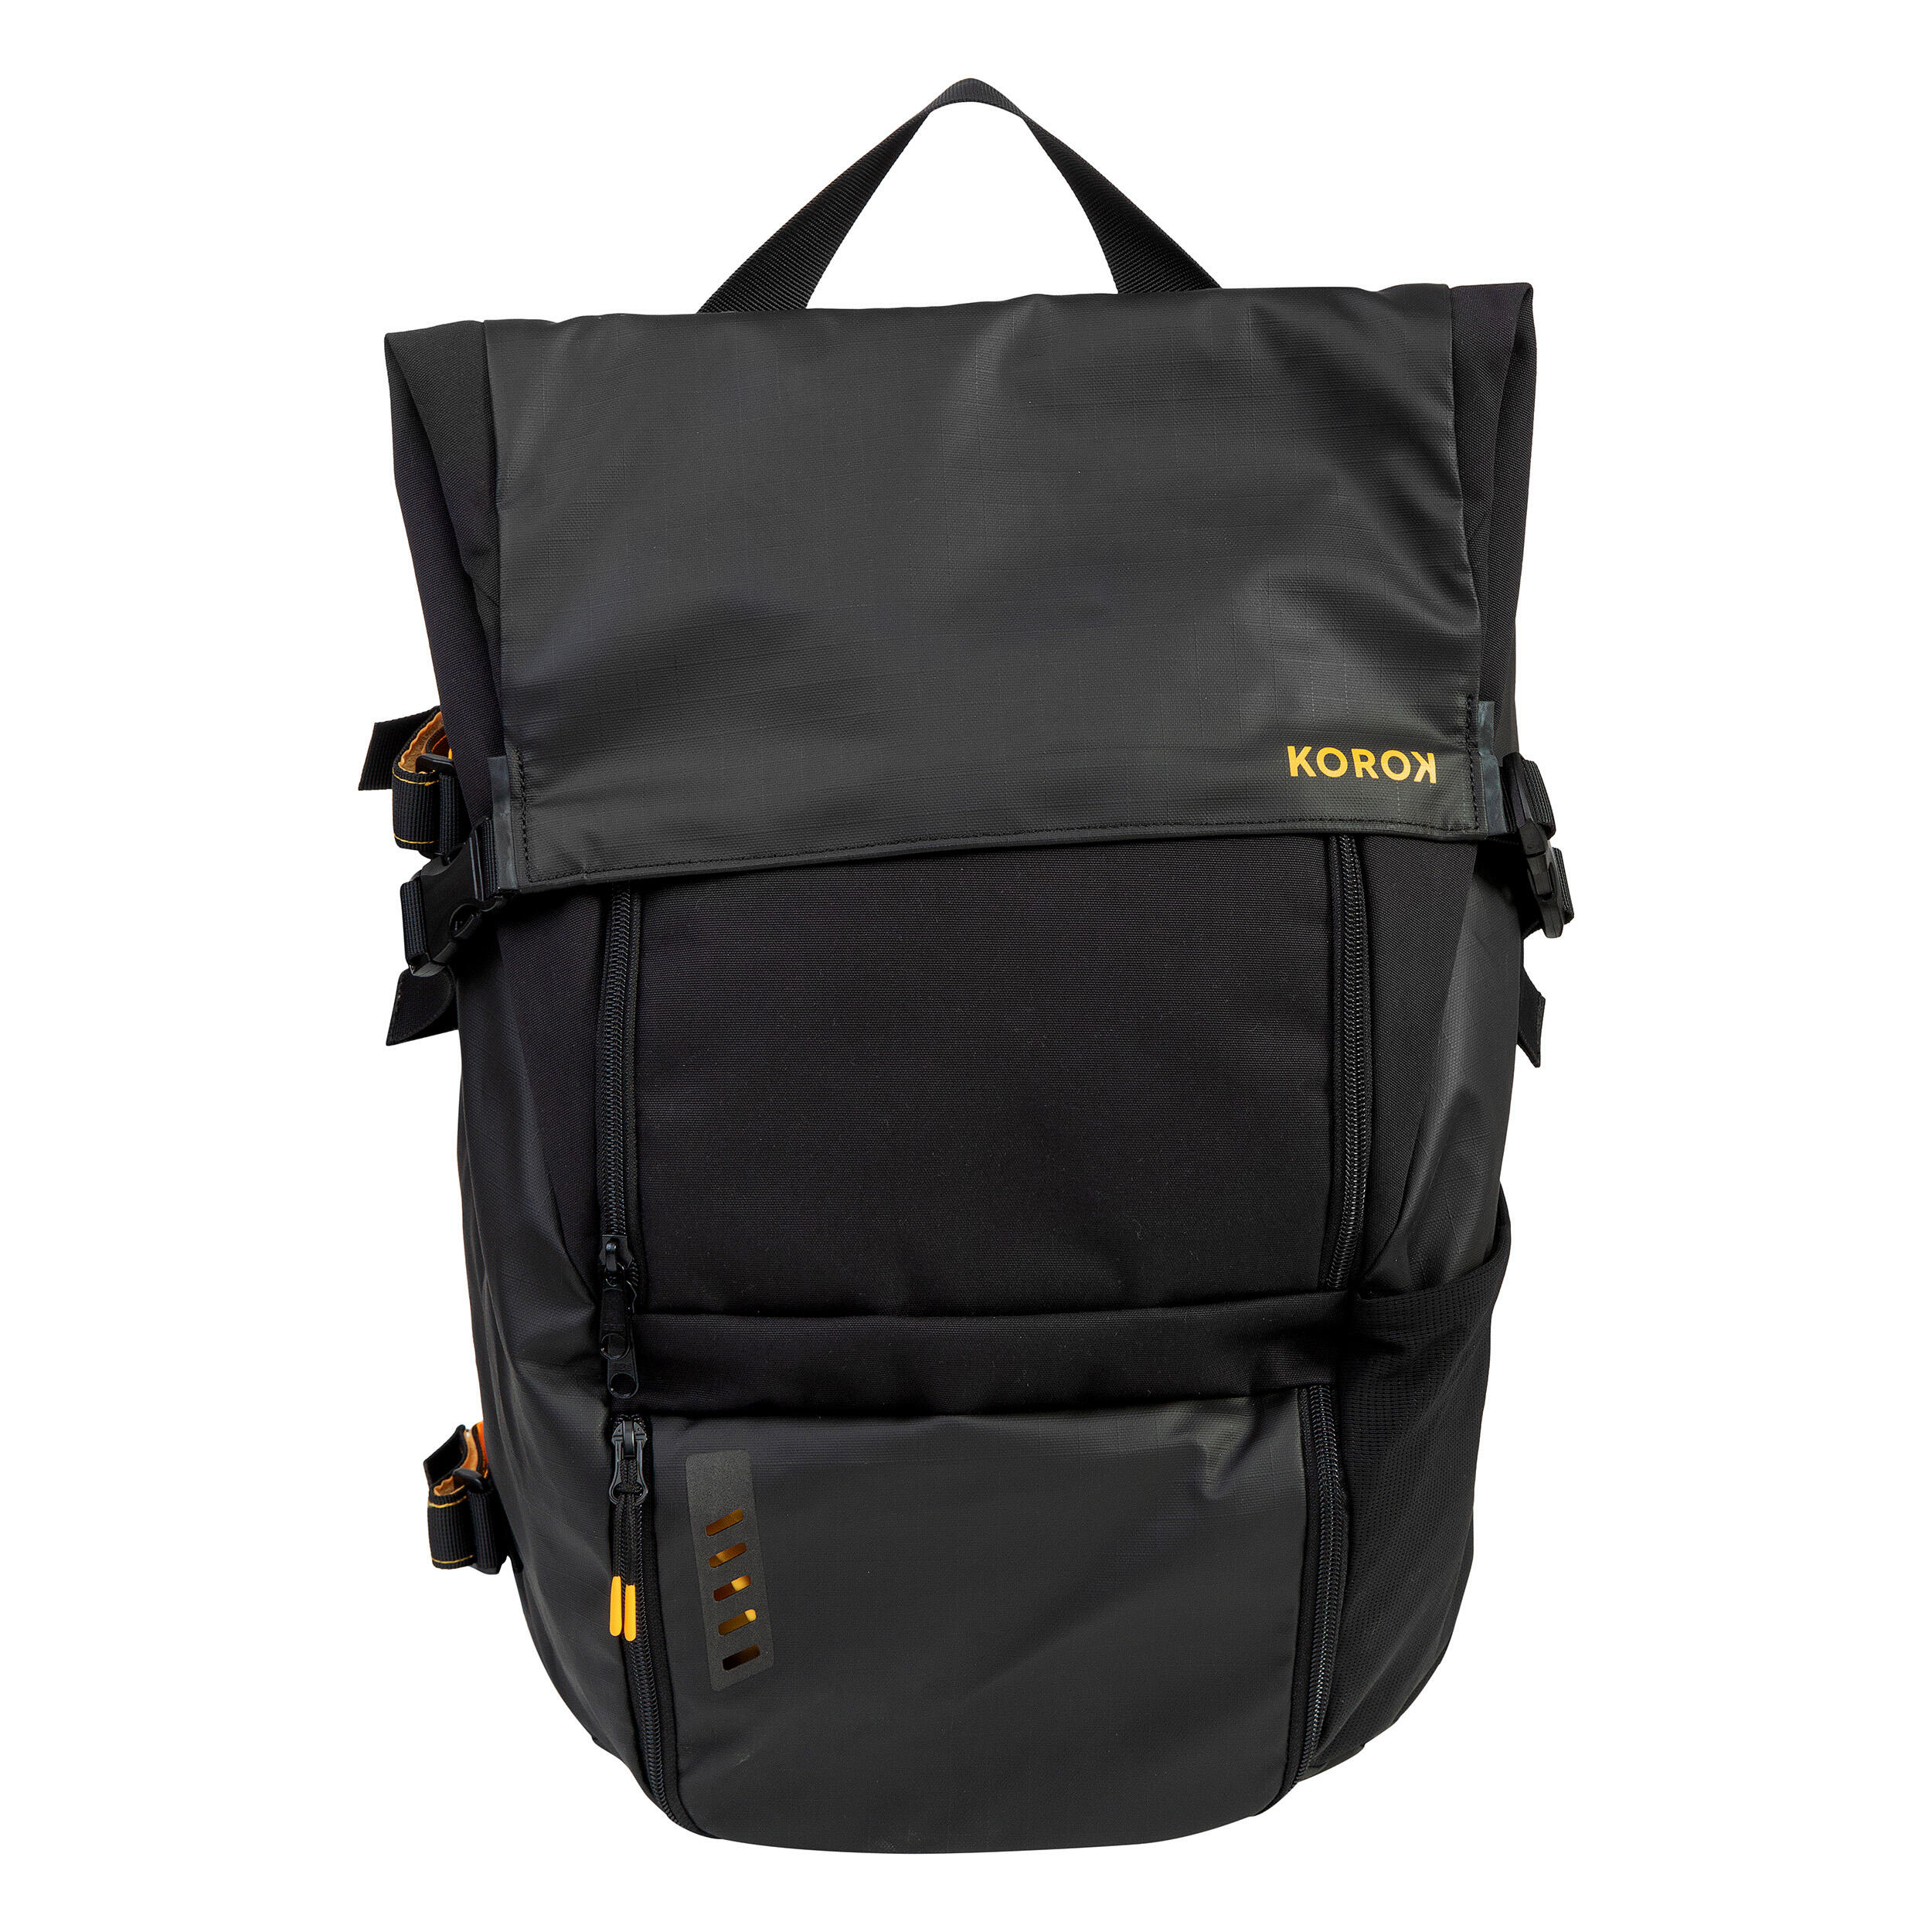 Kids'/Adult Field Hockey Backpack FH500 - Black/Yellow 7/12